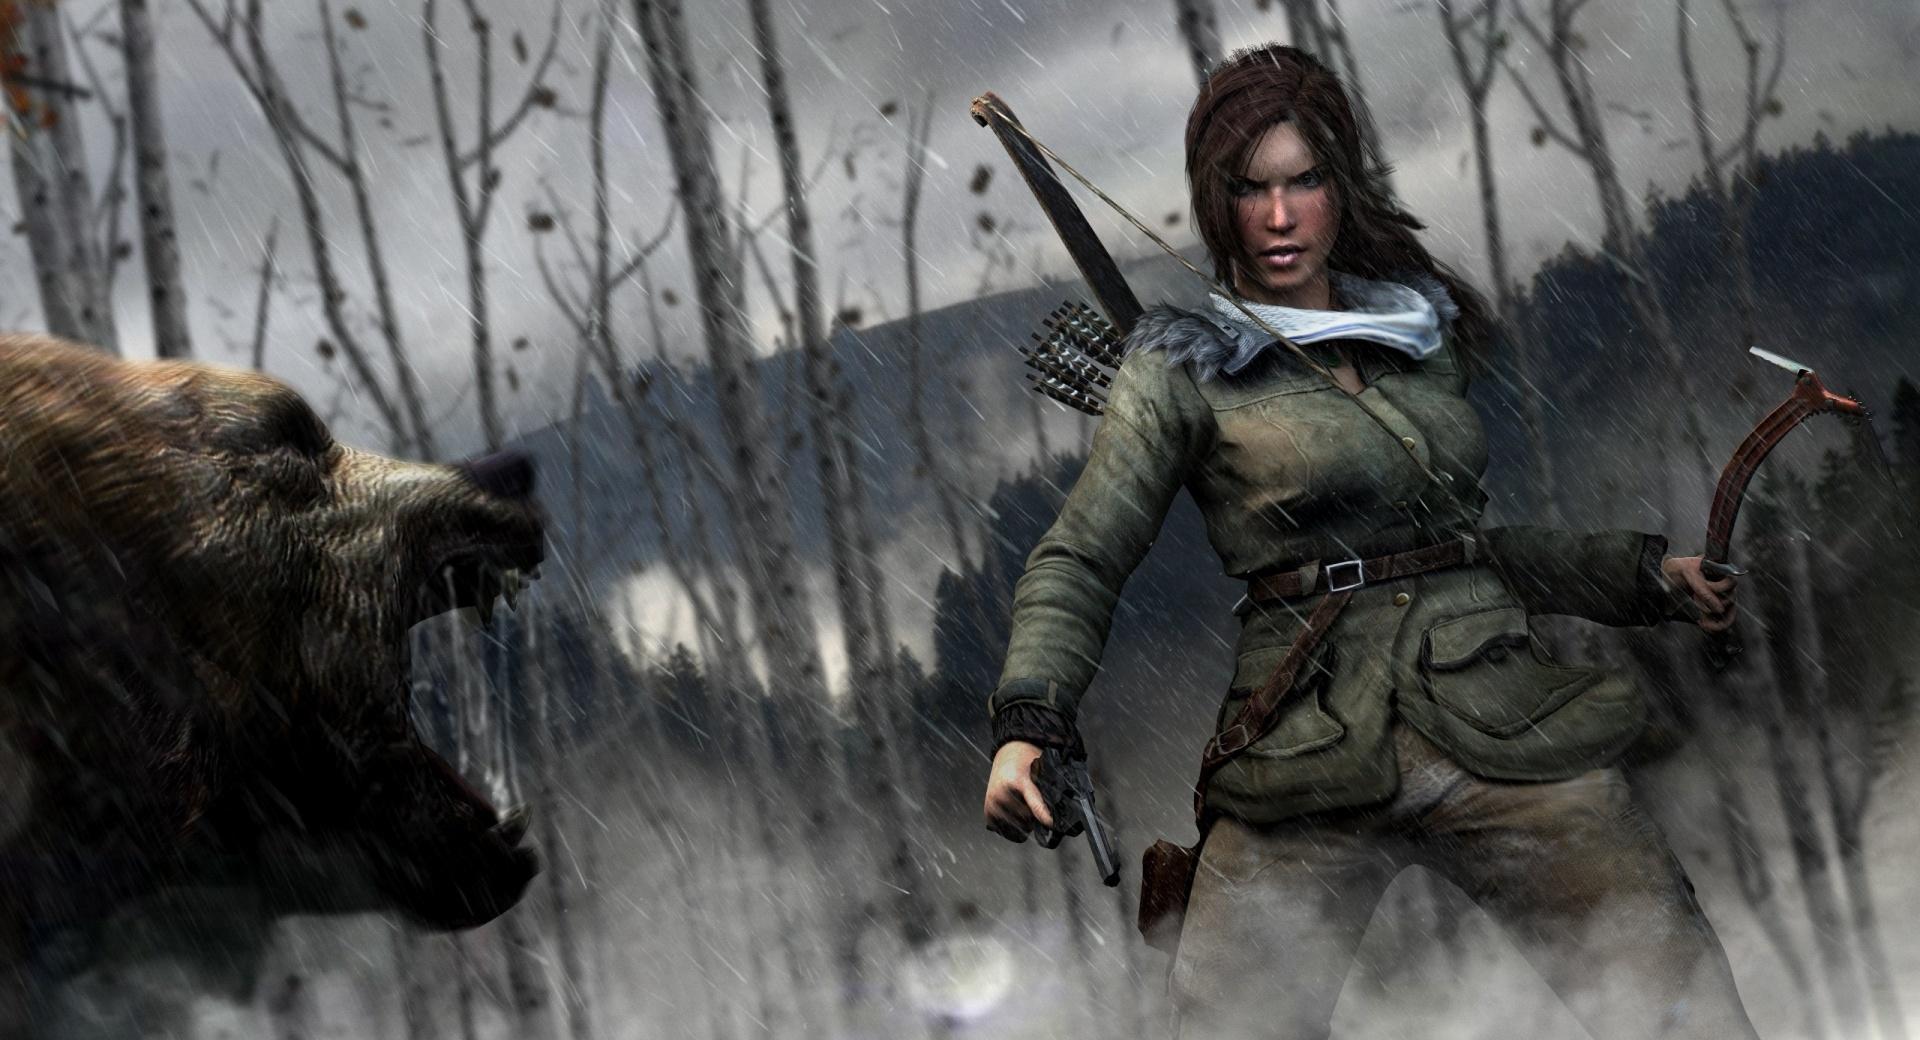 Rise of the Tomb Raider Lara Croft vs Bear at 2048 x 2048 iPad size wallpapers HD quality